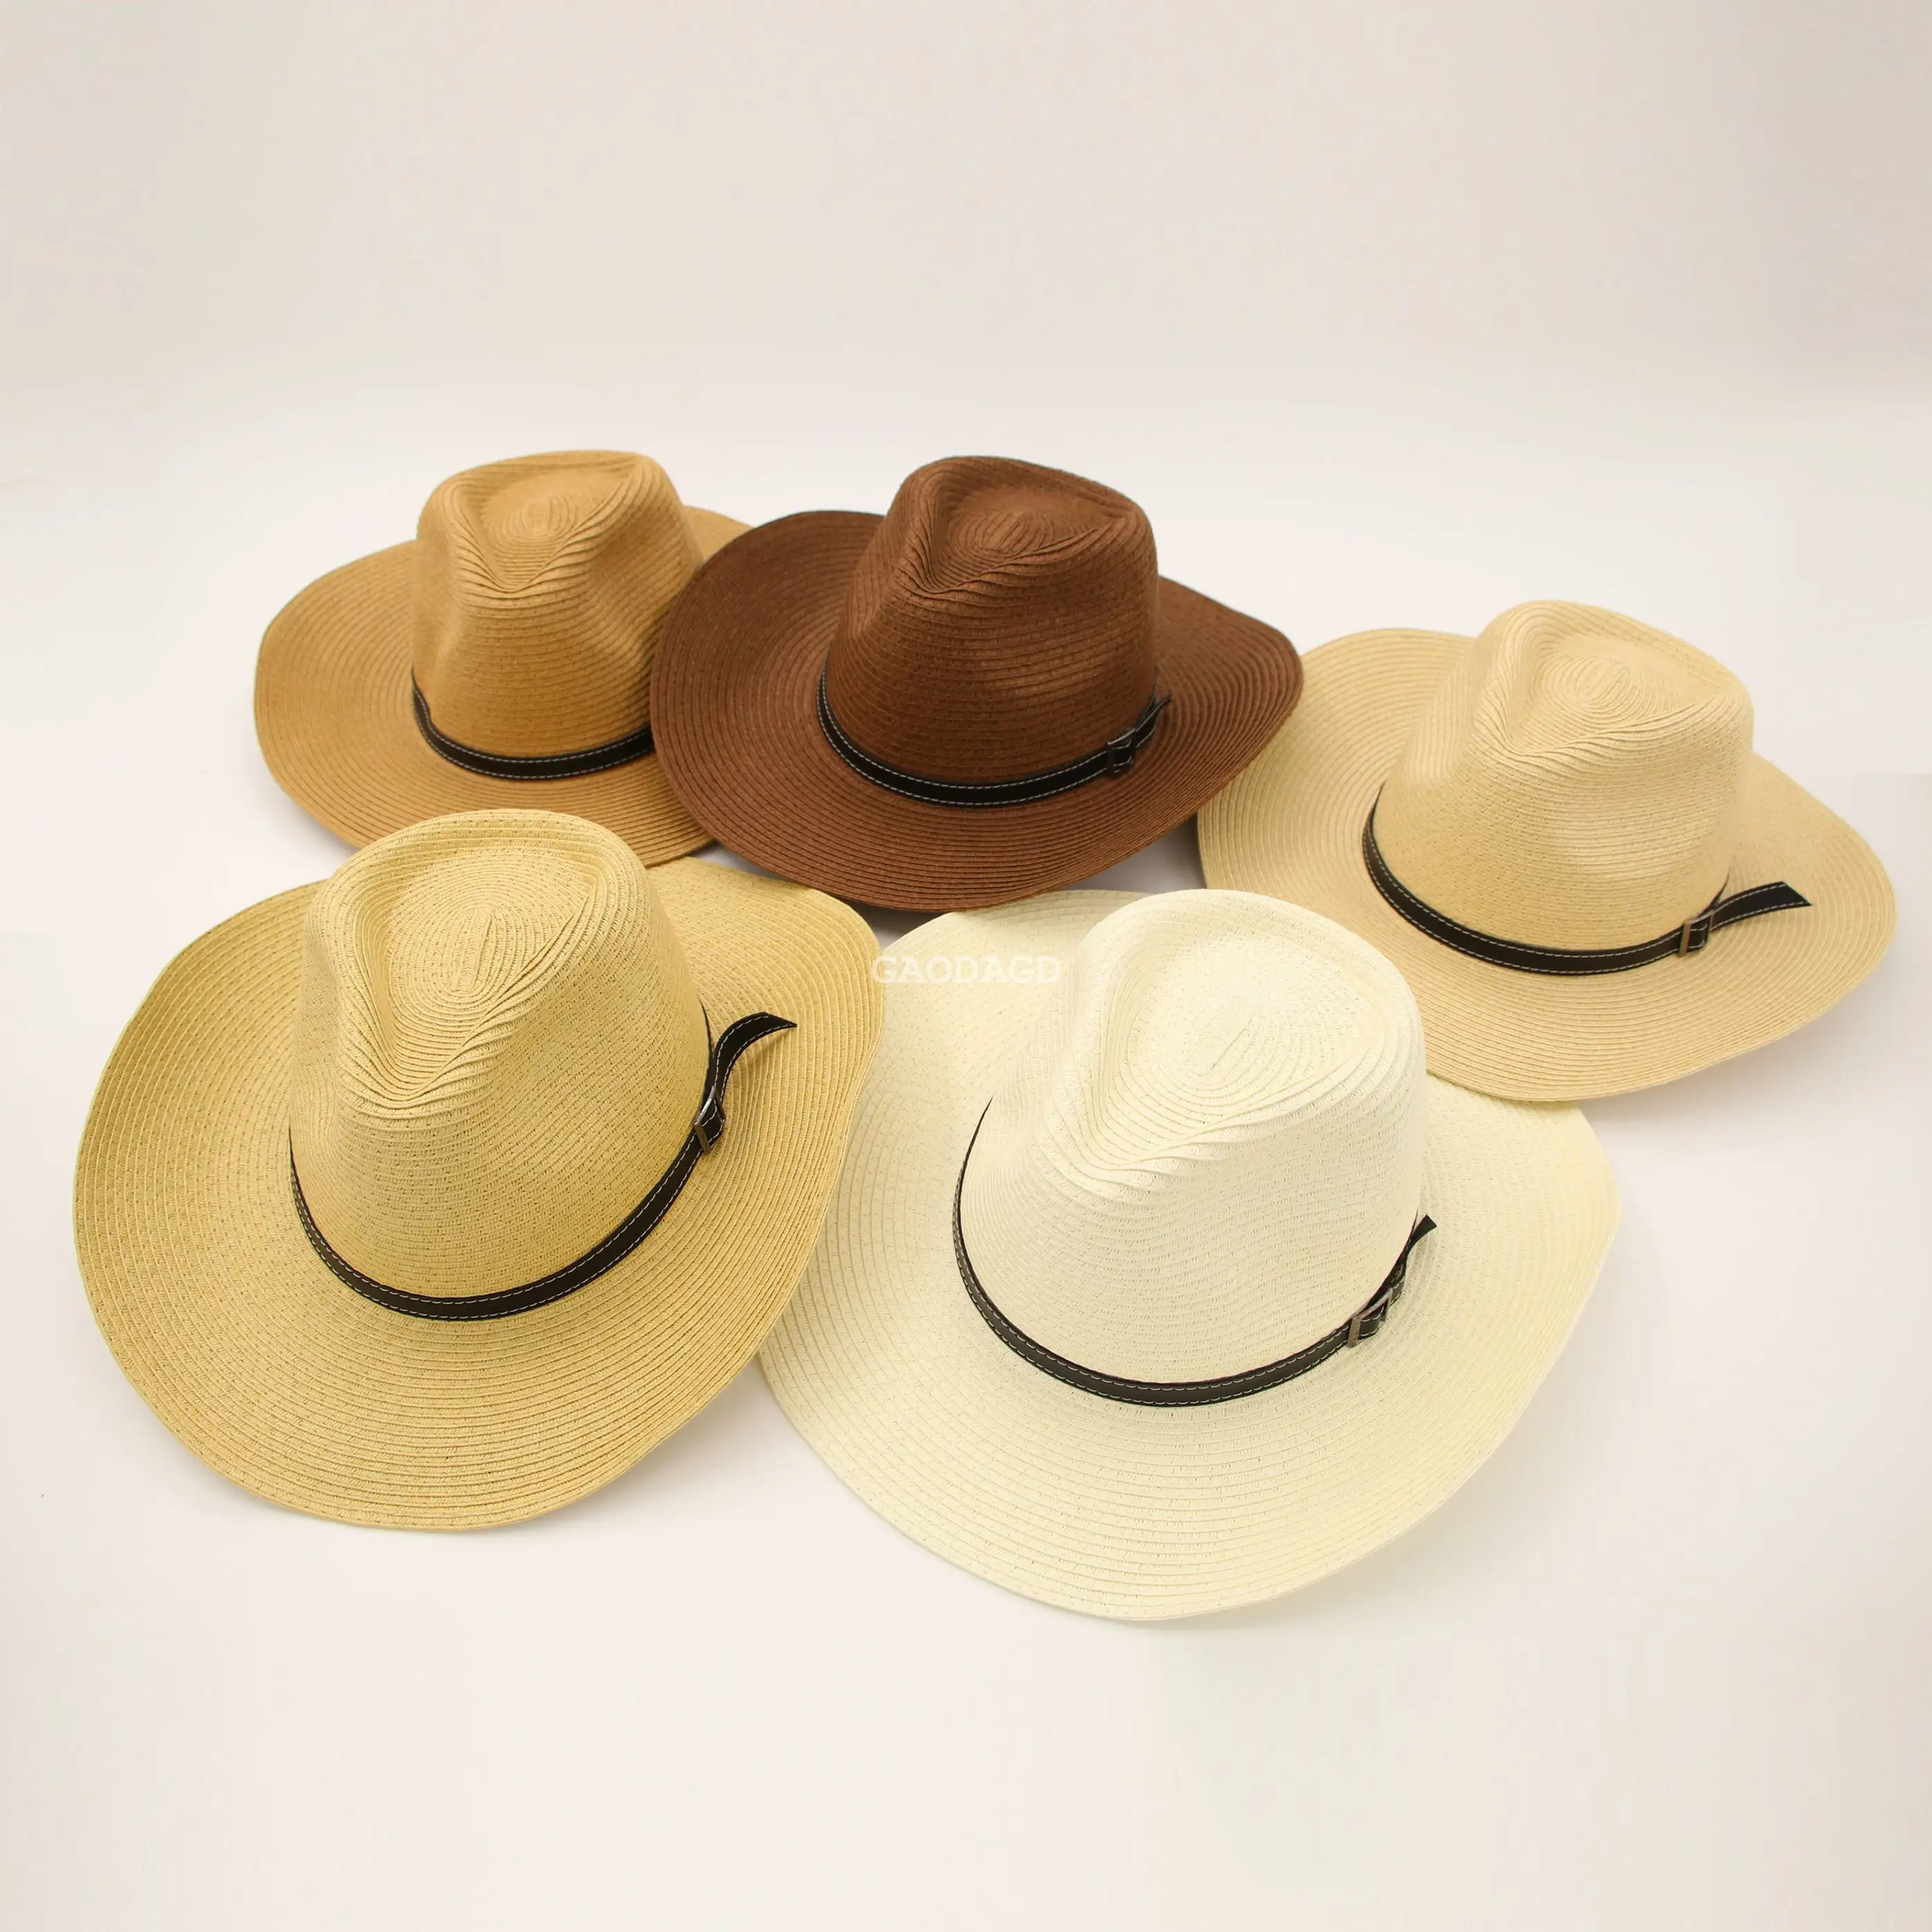 D בתפזורת כובע בוקרים חדש בסגנון מערבי בצבעים רבים כובע בוקרים צמה נייר עם שוליים גדולים לשני המינים